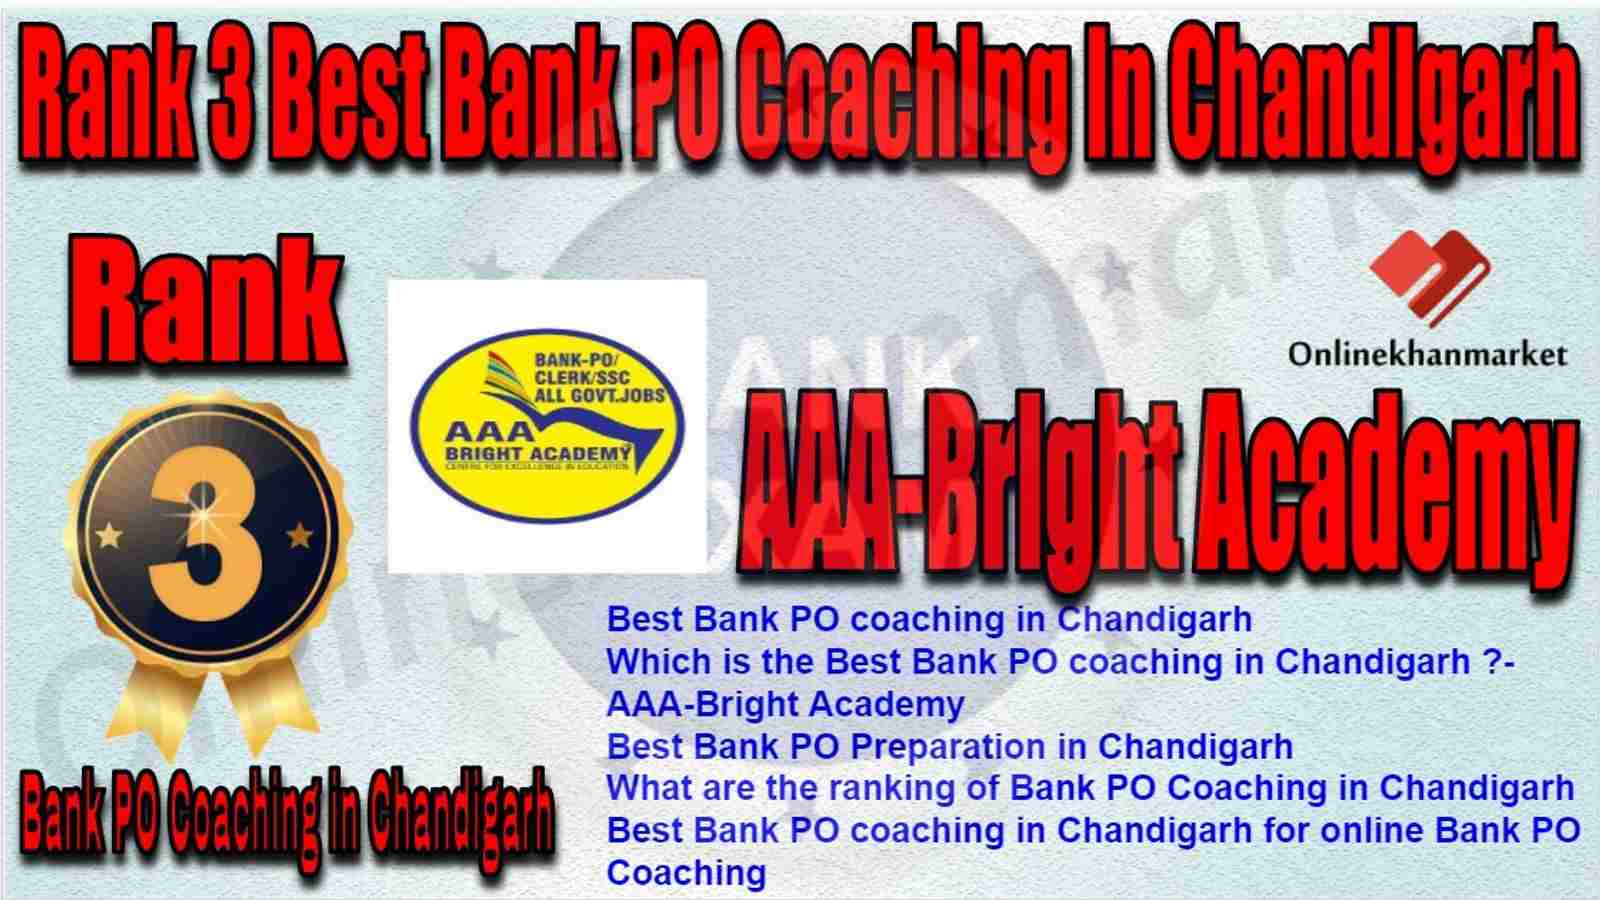 Rank 3 Best Bank PO Coaching in Chandigarh